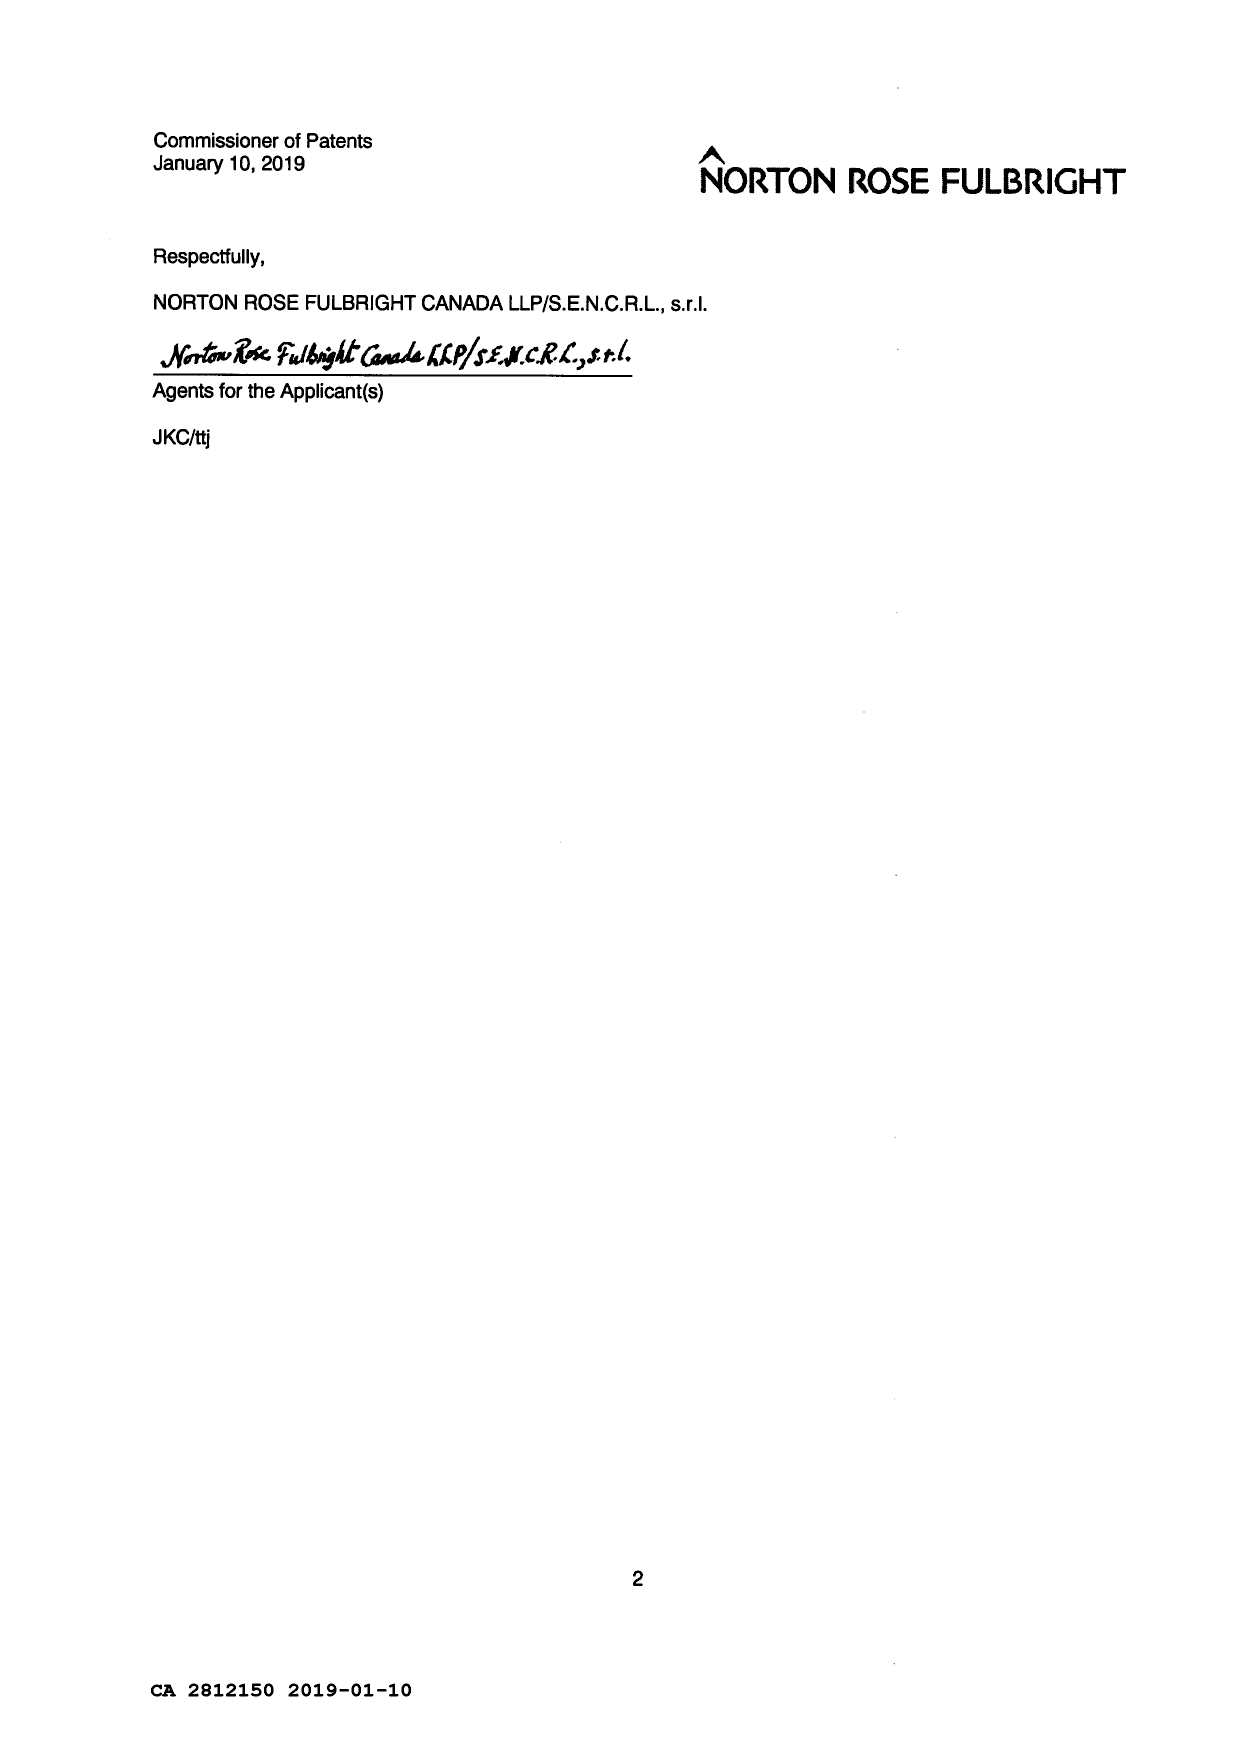 Canadian Patent Document 2812150. Correspondence 20181210. Image 3 of 3